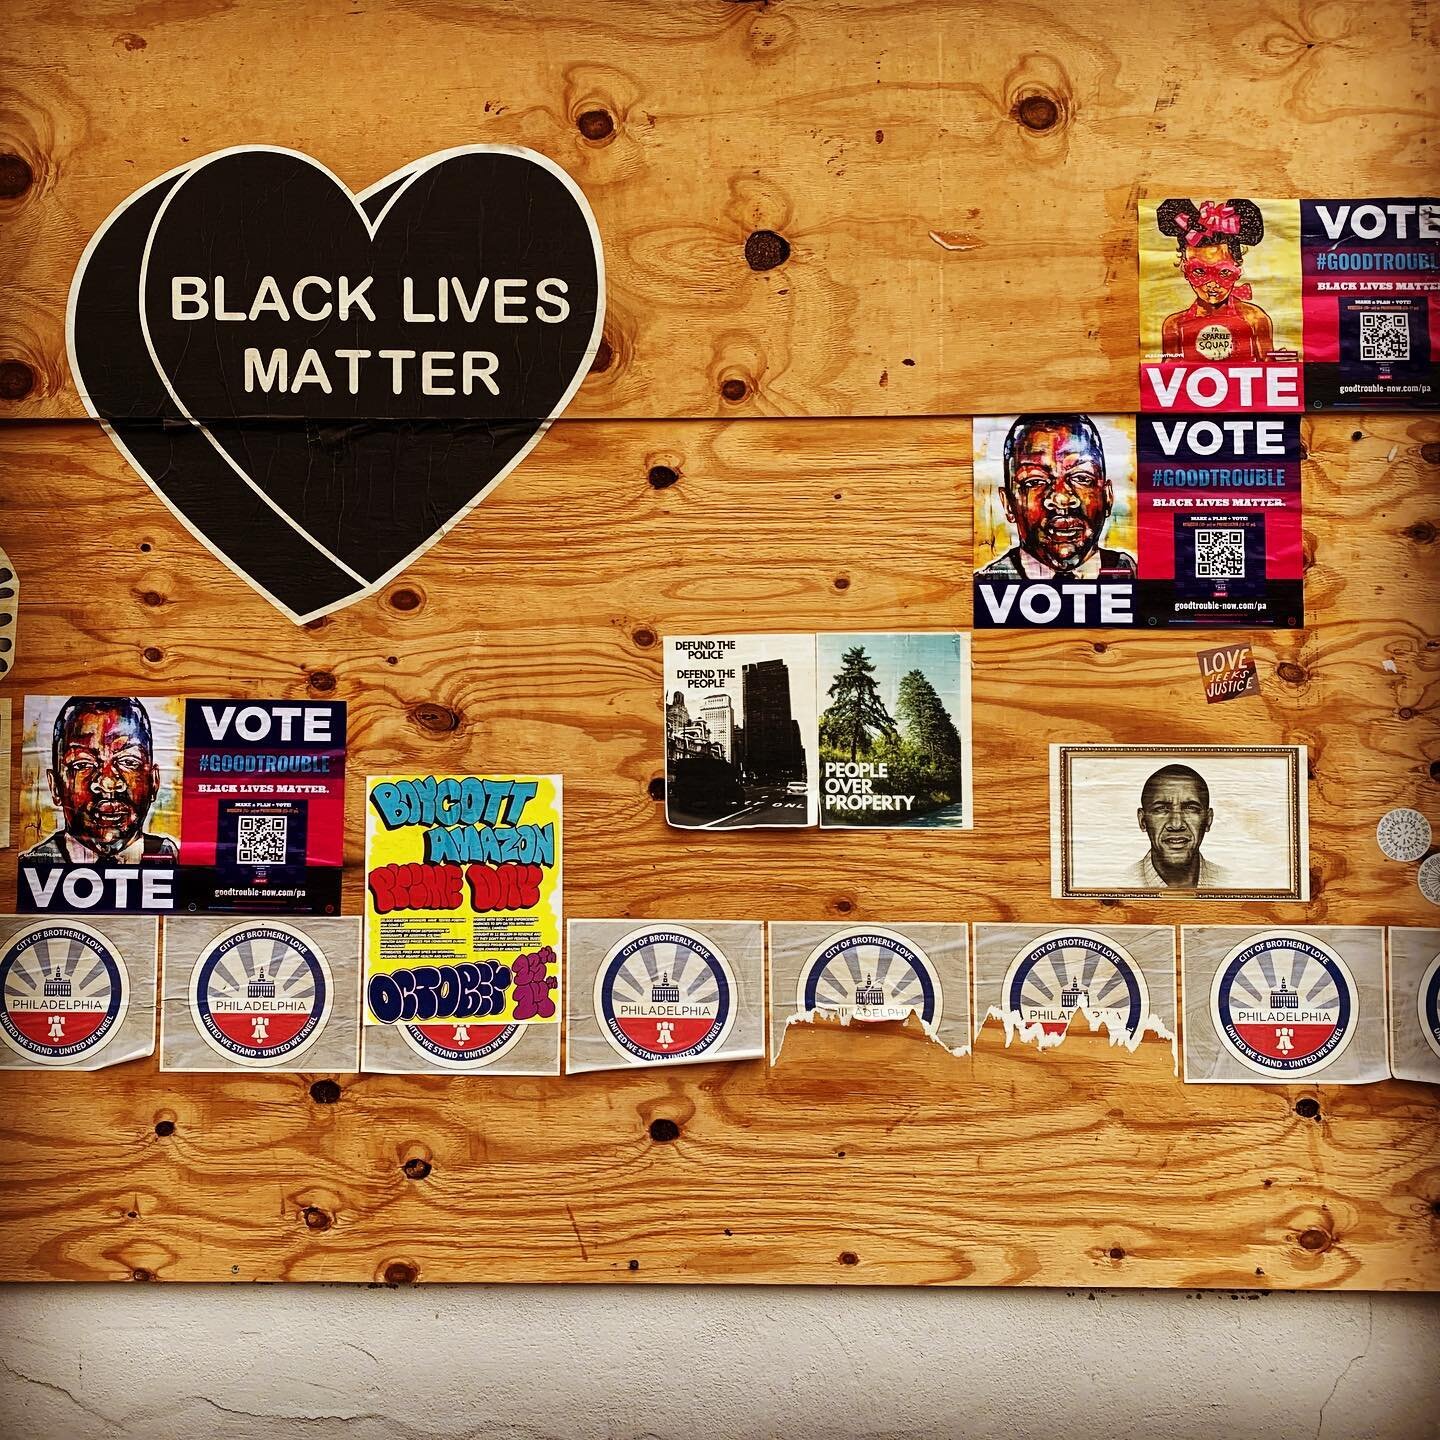 we sparkling with @edwardslynthia and @dcsparklesquad in #philly #vote #blacklivesmatter #sparklovenothate #love #walterwallacejr #sayhisname